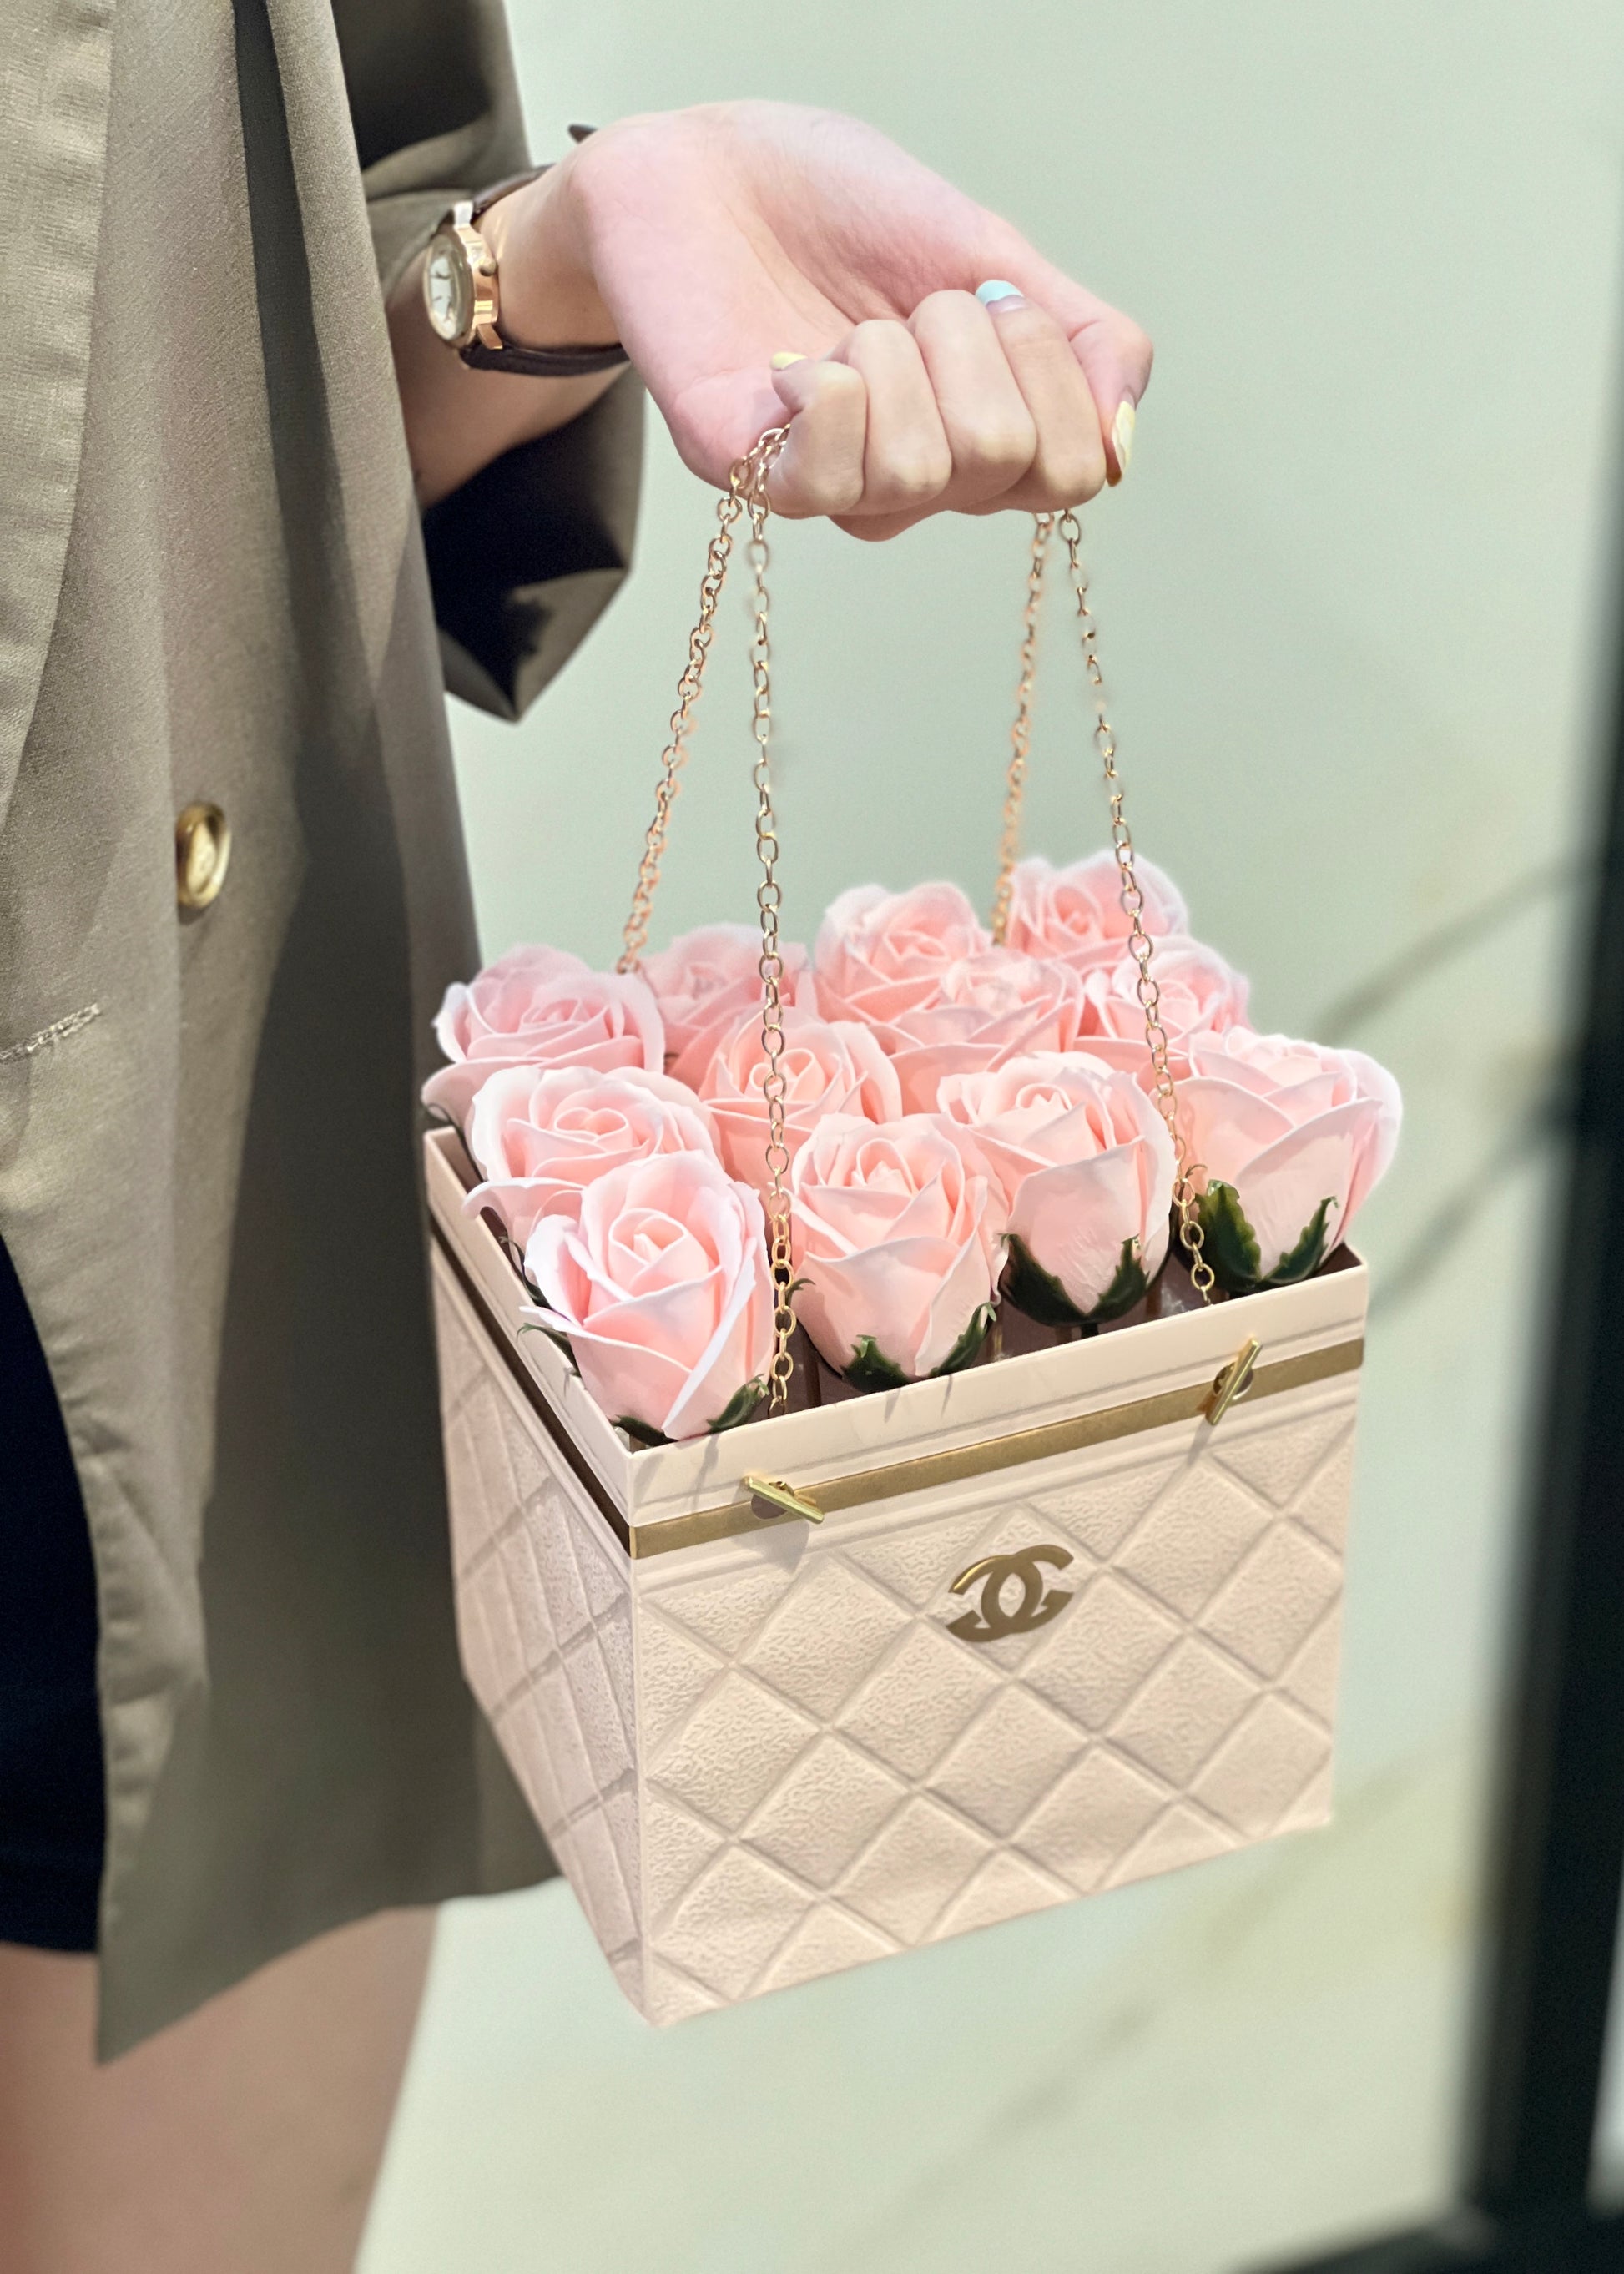 Channel Bag of Roses (Soap Roses) – FlorismDeArt